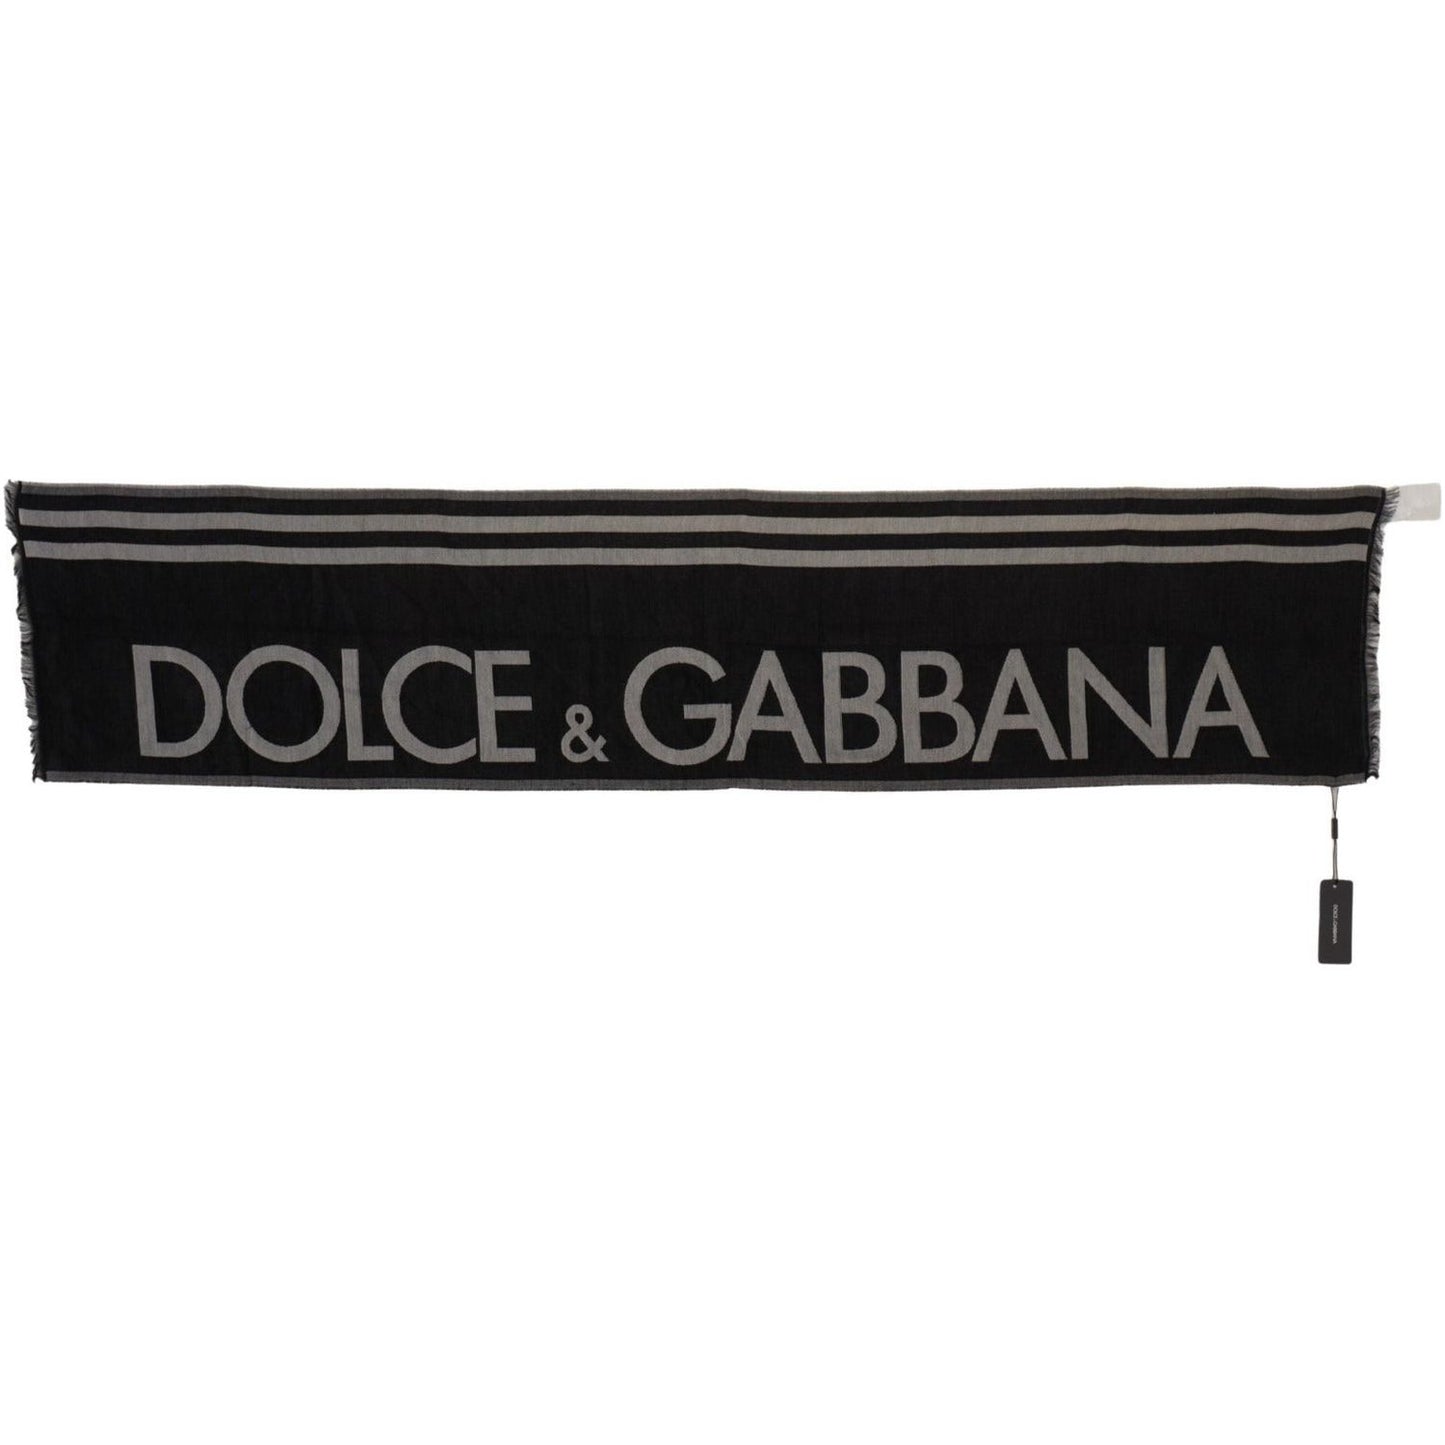 Dolce & GabbanaElegant Monochrome Men's Scarf WrapMcRichard Designer Brands£279.00